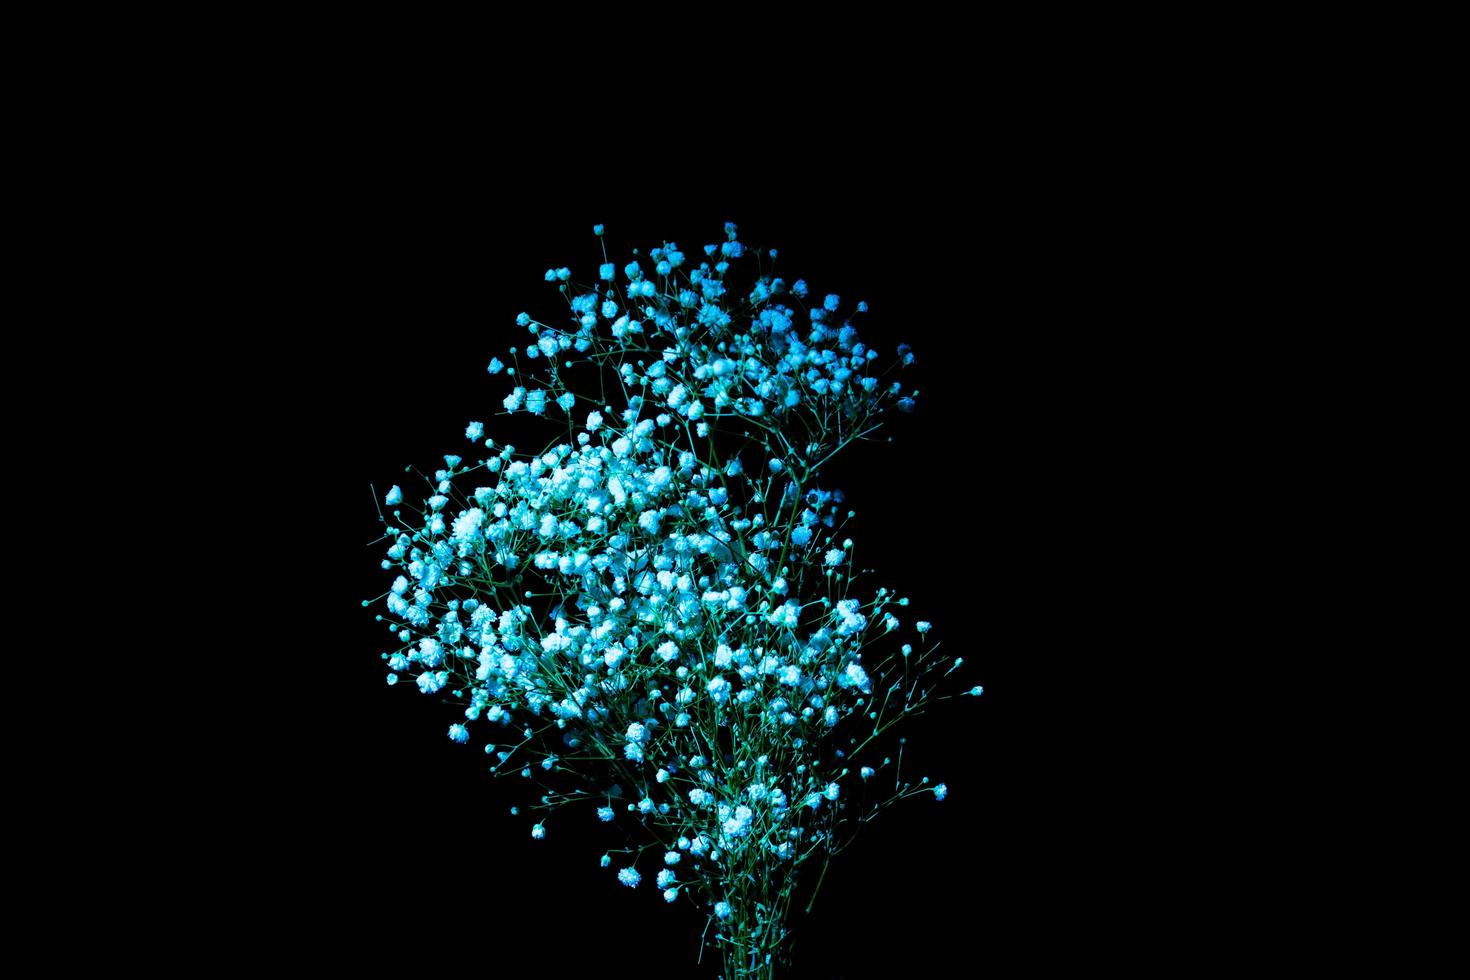 gypsophila azul sobre un fondo oscuro foto